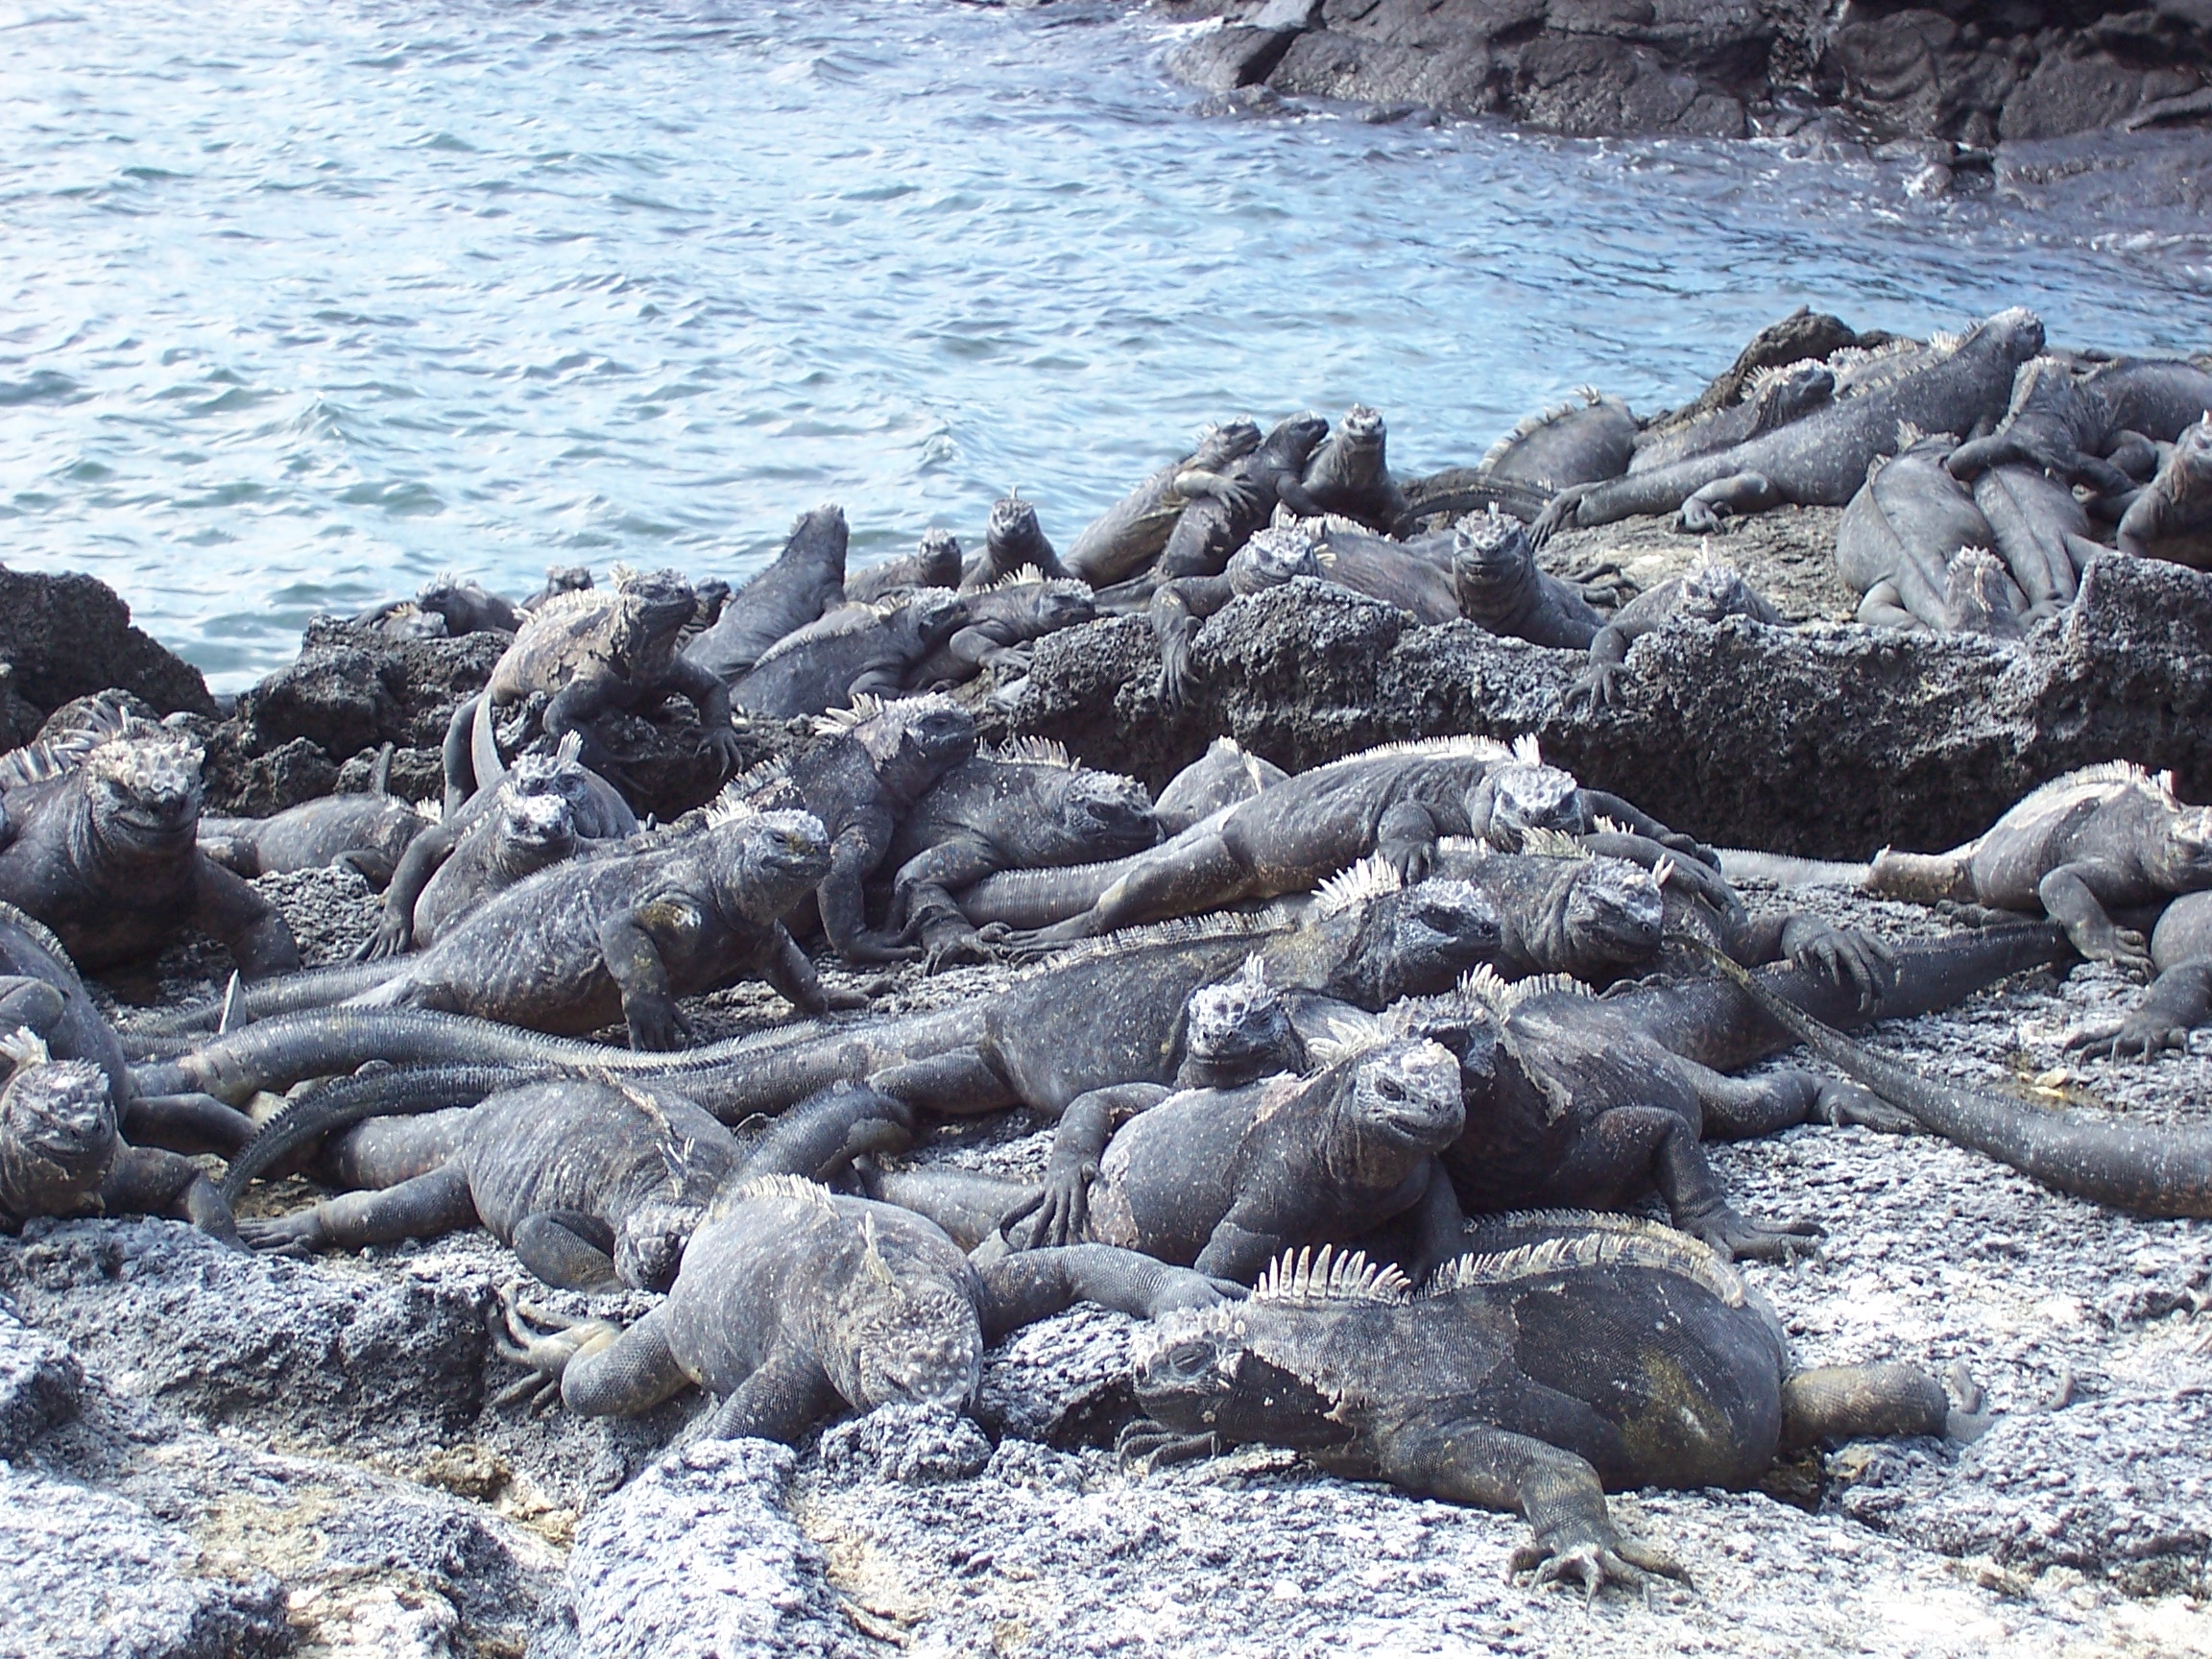 Galapagos Islands Marine Iguana Colony